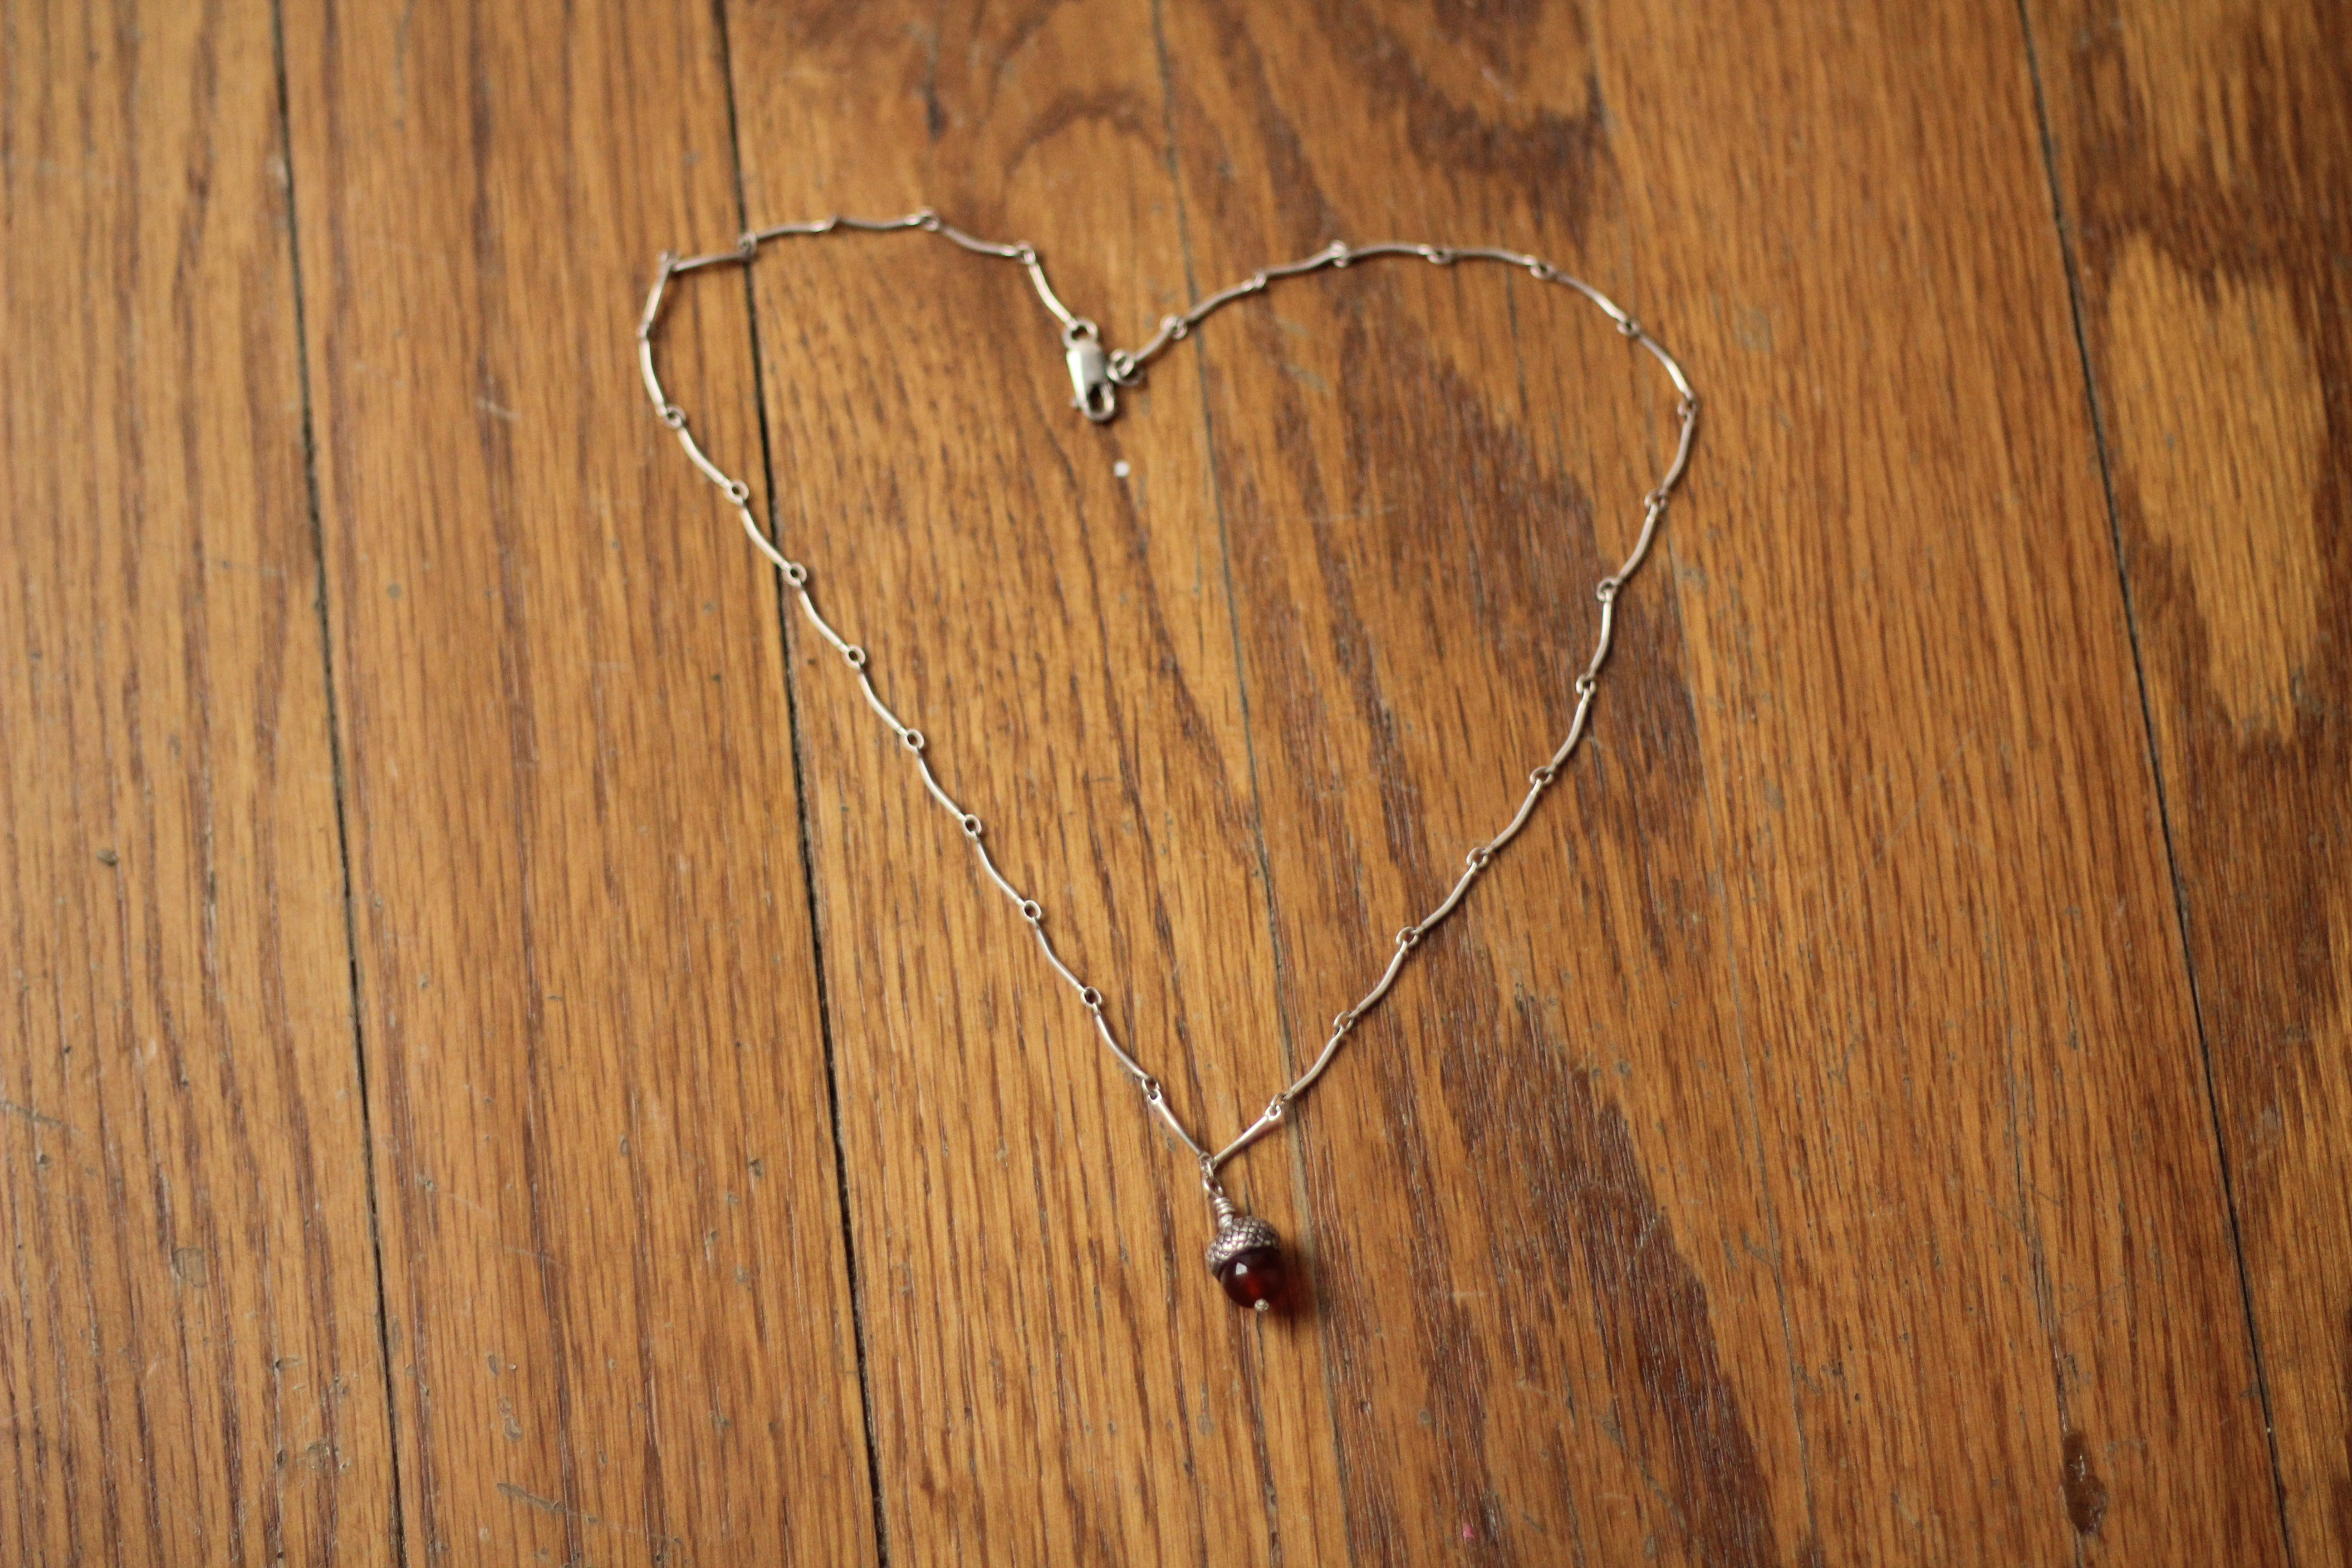 acorn necklace in shape of heart